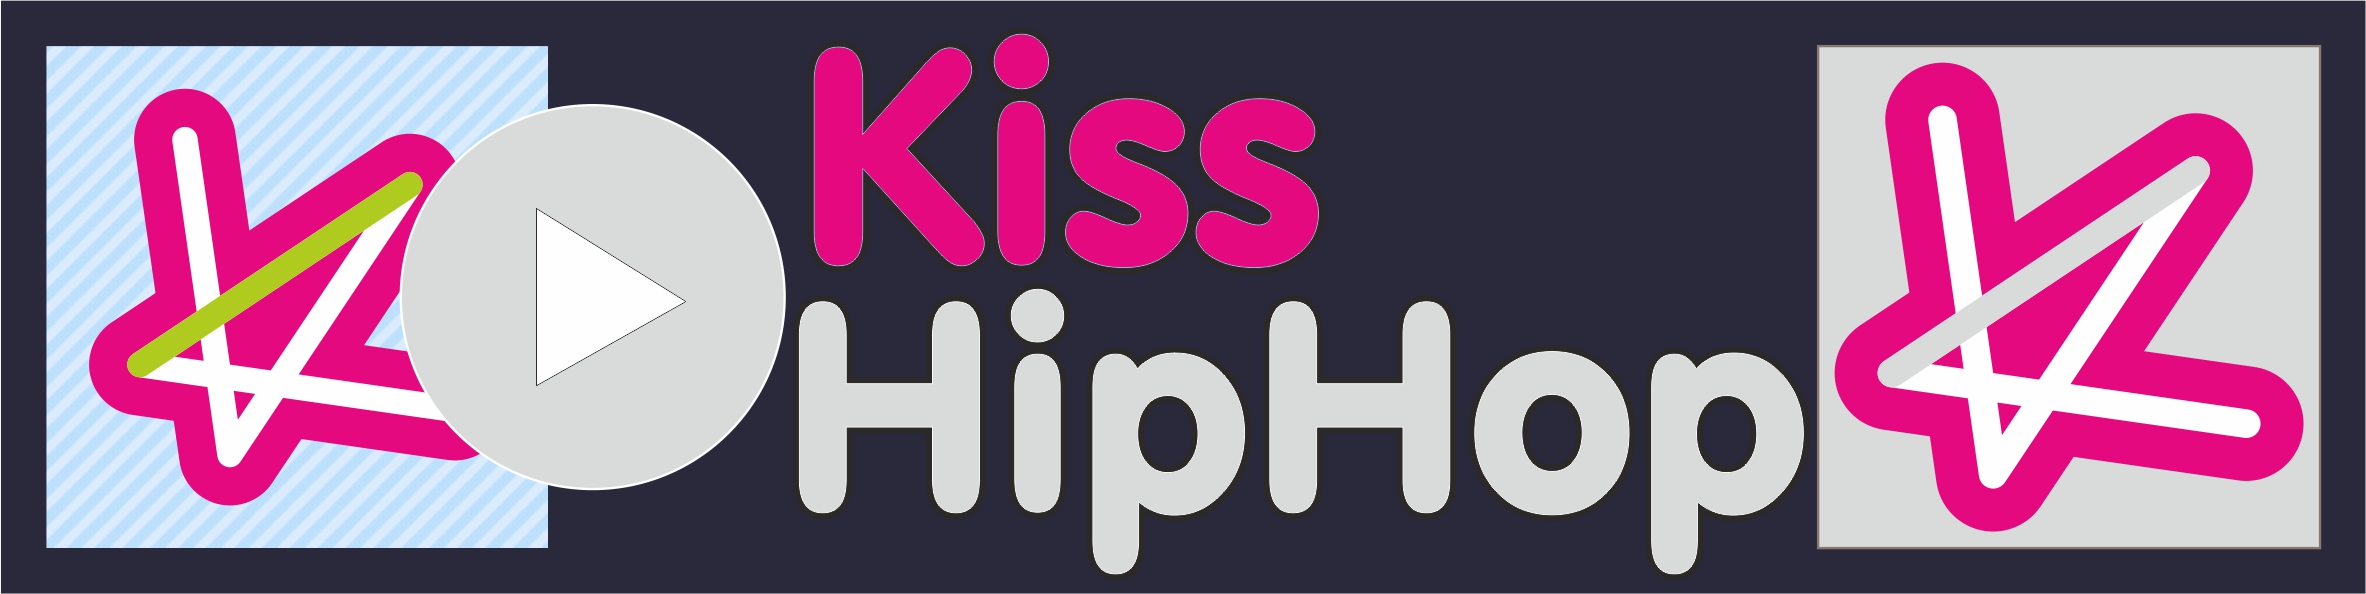 Kiss HipHop